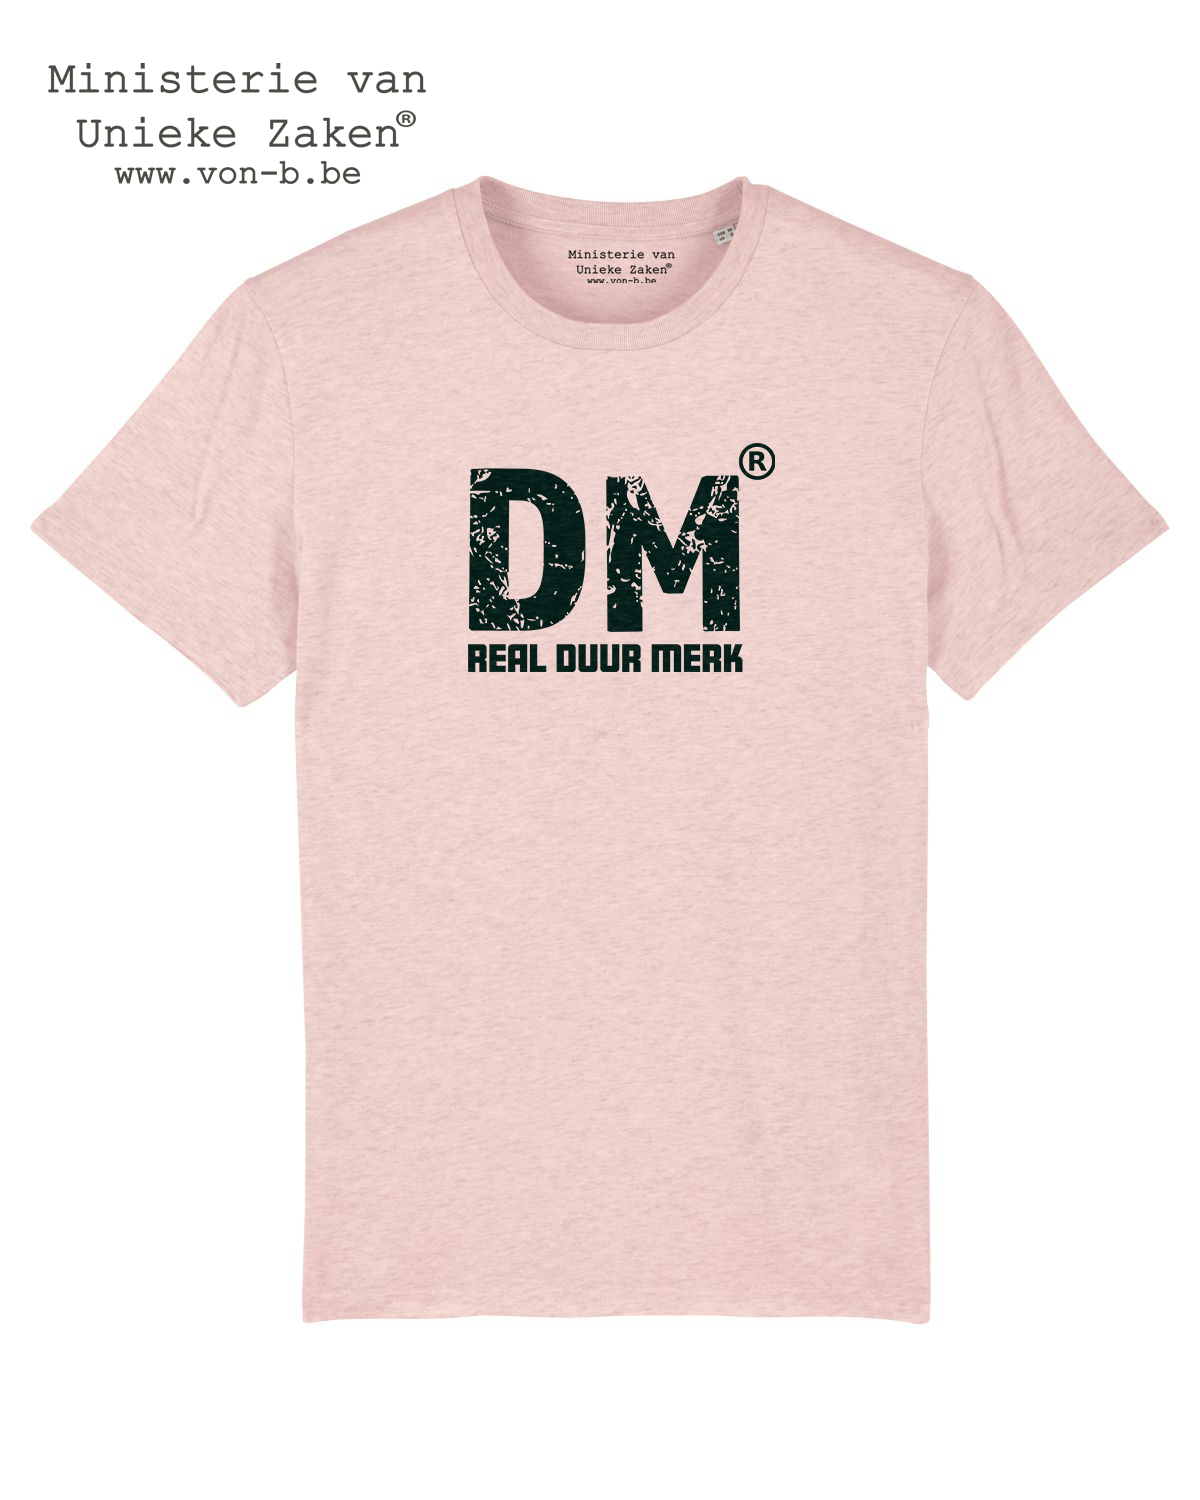 Vermindering gunstig Verenigen Duur Merk RDM - T-shirt man Heather Pink - Ministerie Van Unieke Zaken